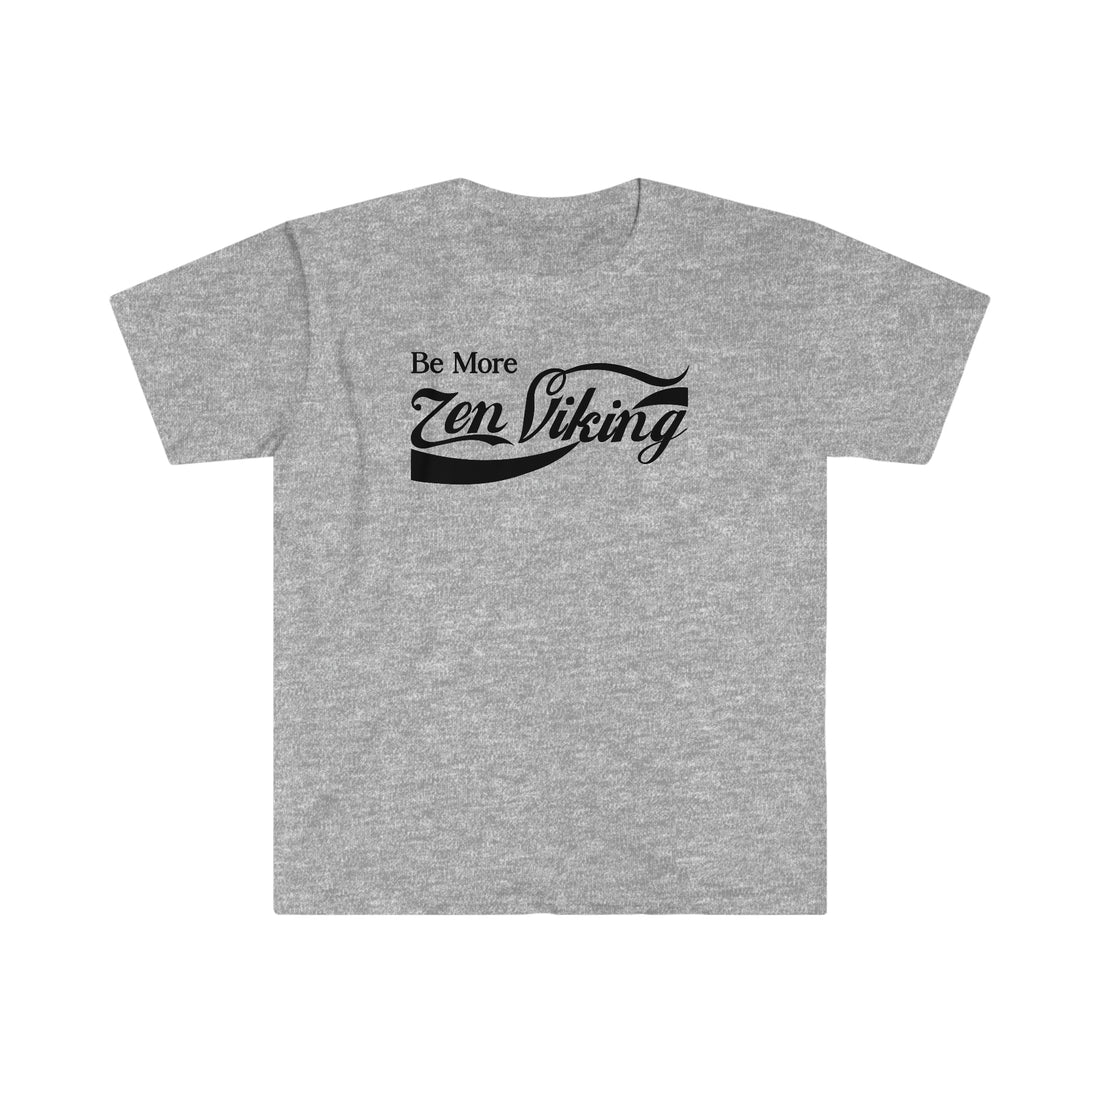 Be More ZV Black Label T-Shirt - THE ZEN VIKING